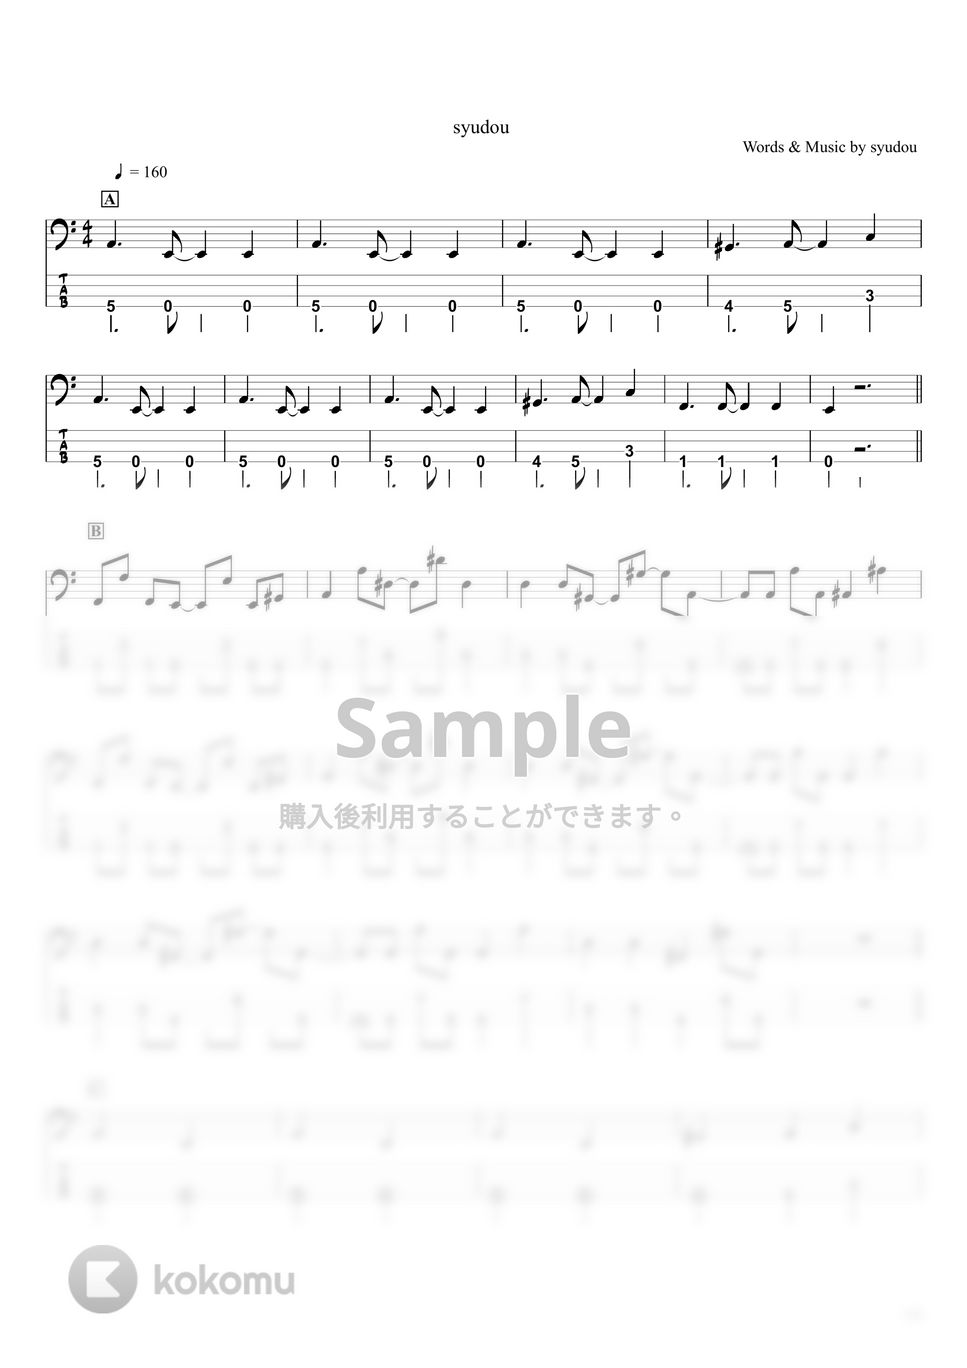 syudou - キュートなカノジョ (ベースTAB譜☆4弦ベース対応) by swbass